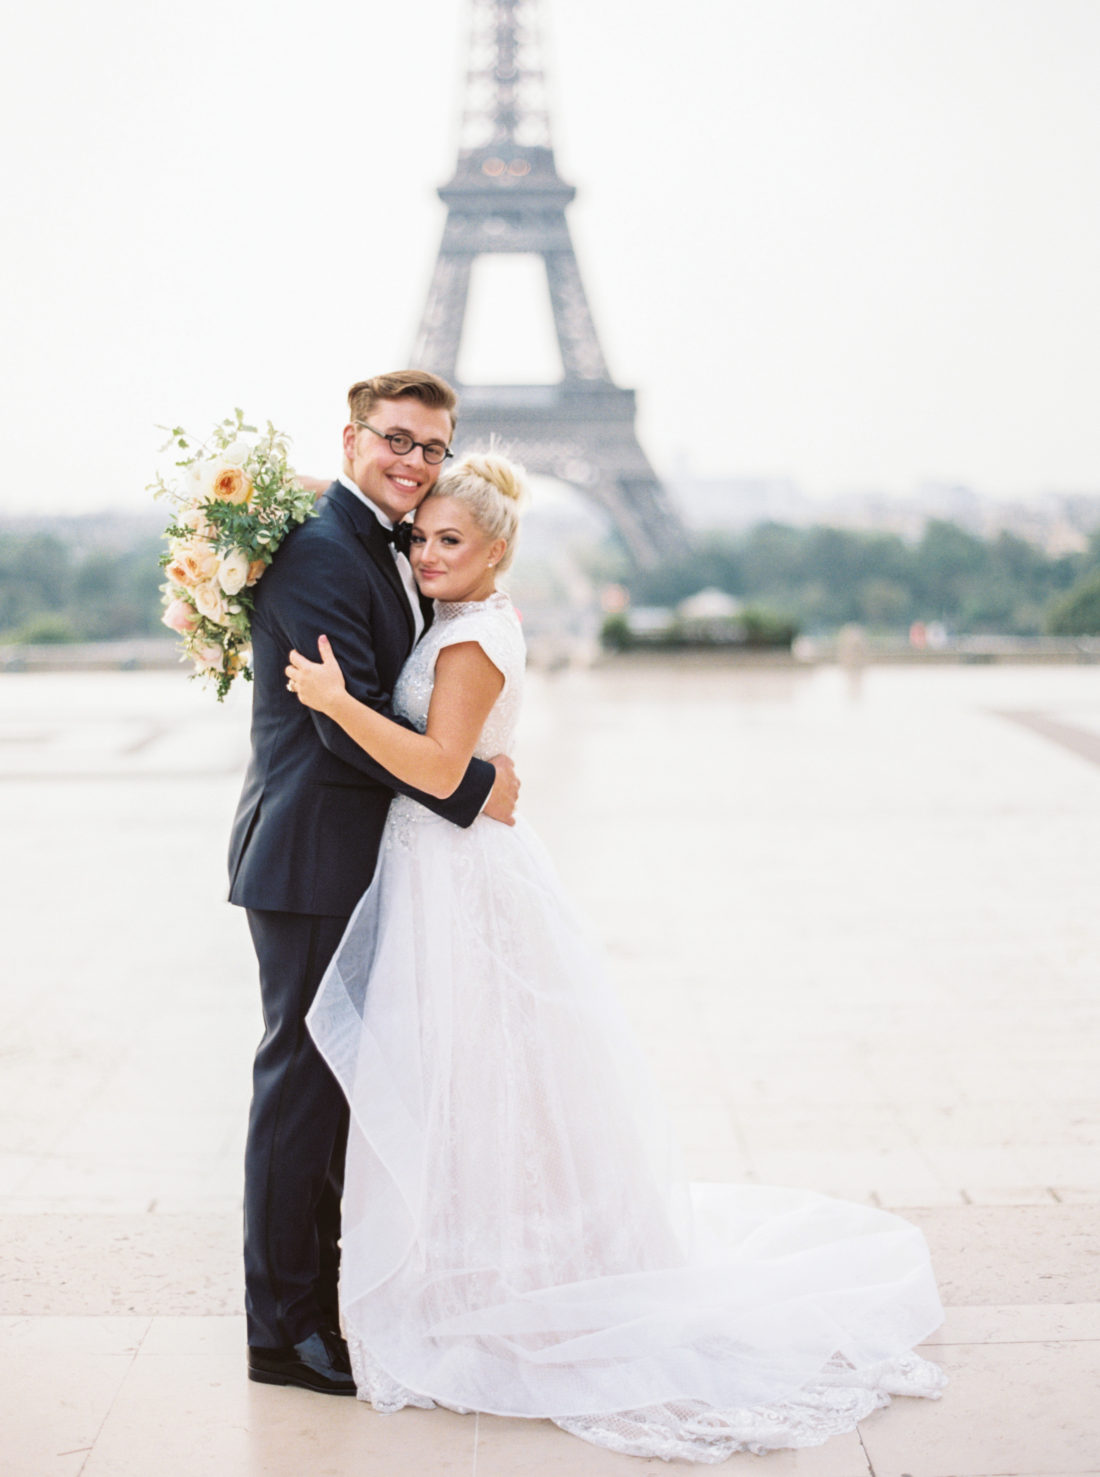 paris wedding planner rachael ellen events tips post photo 6